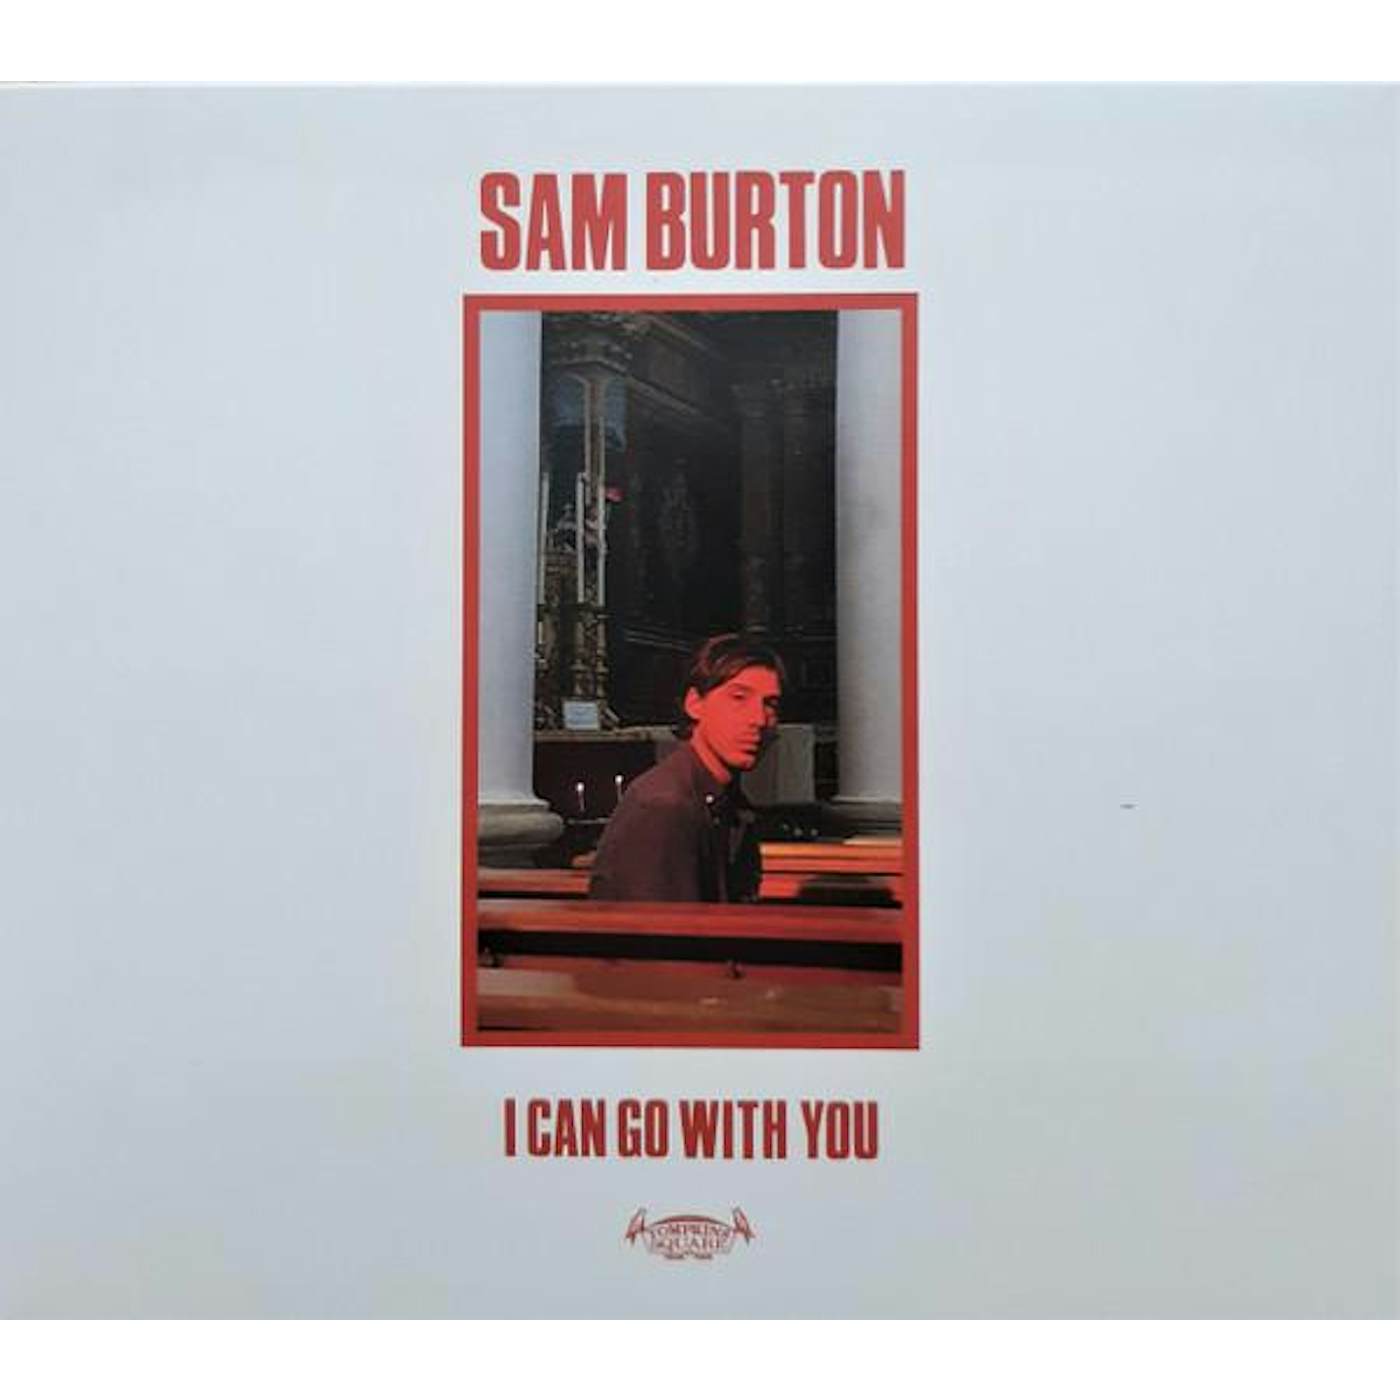 Sam Burton I CAN GO WITH YOU CD